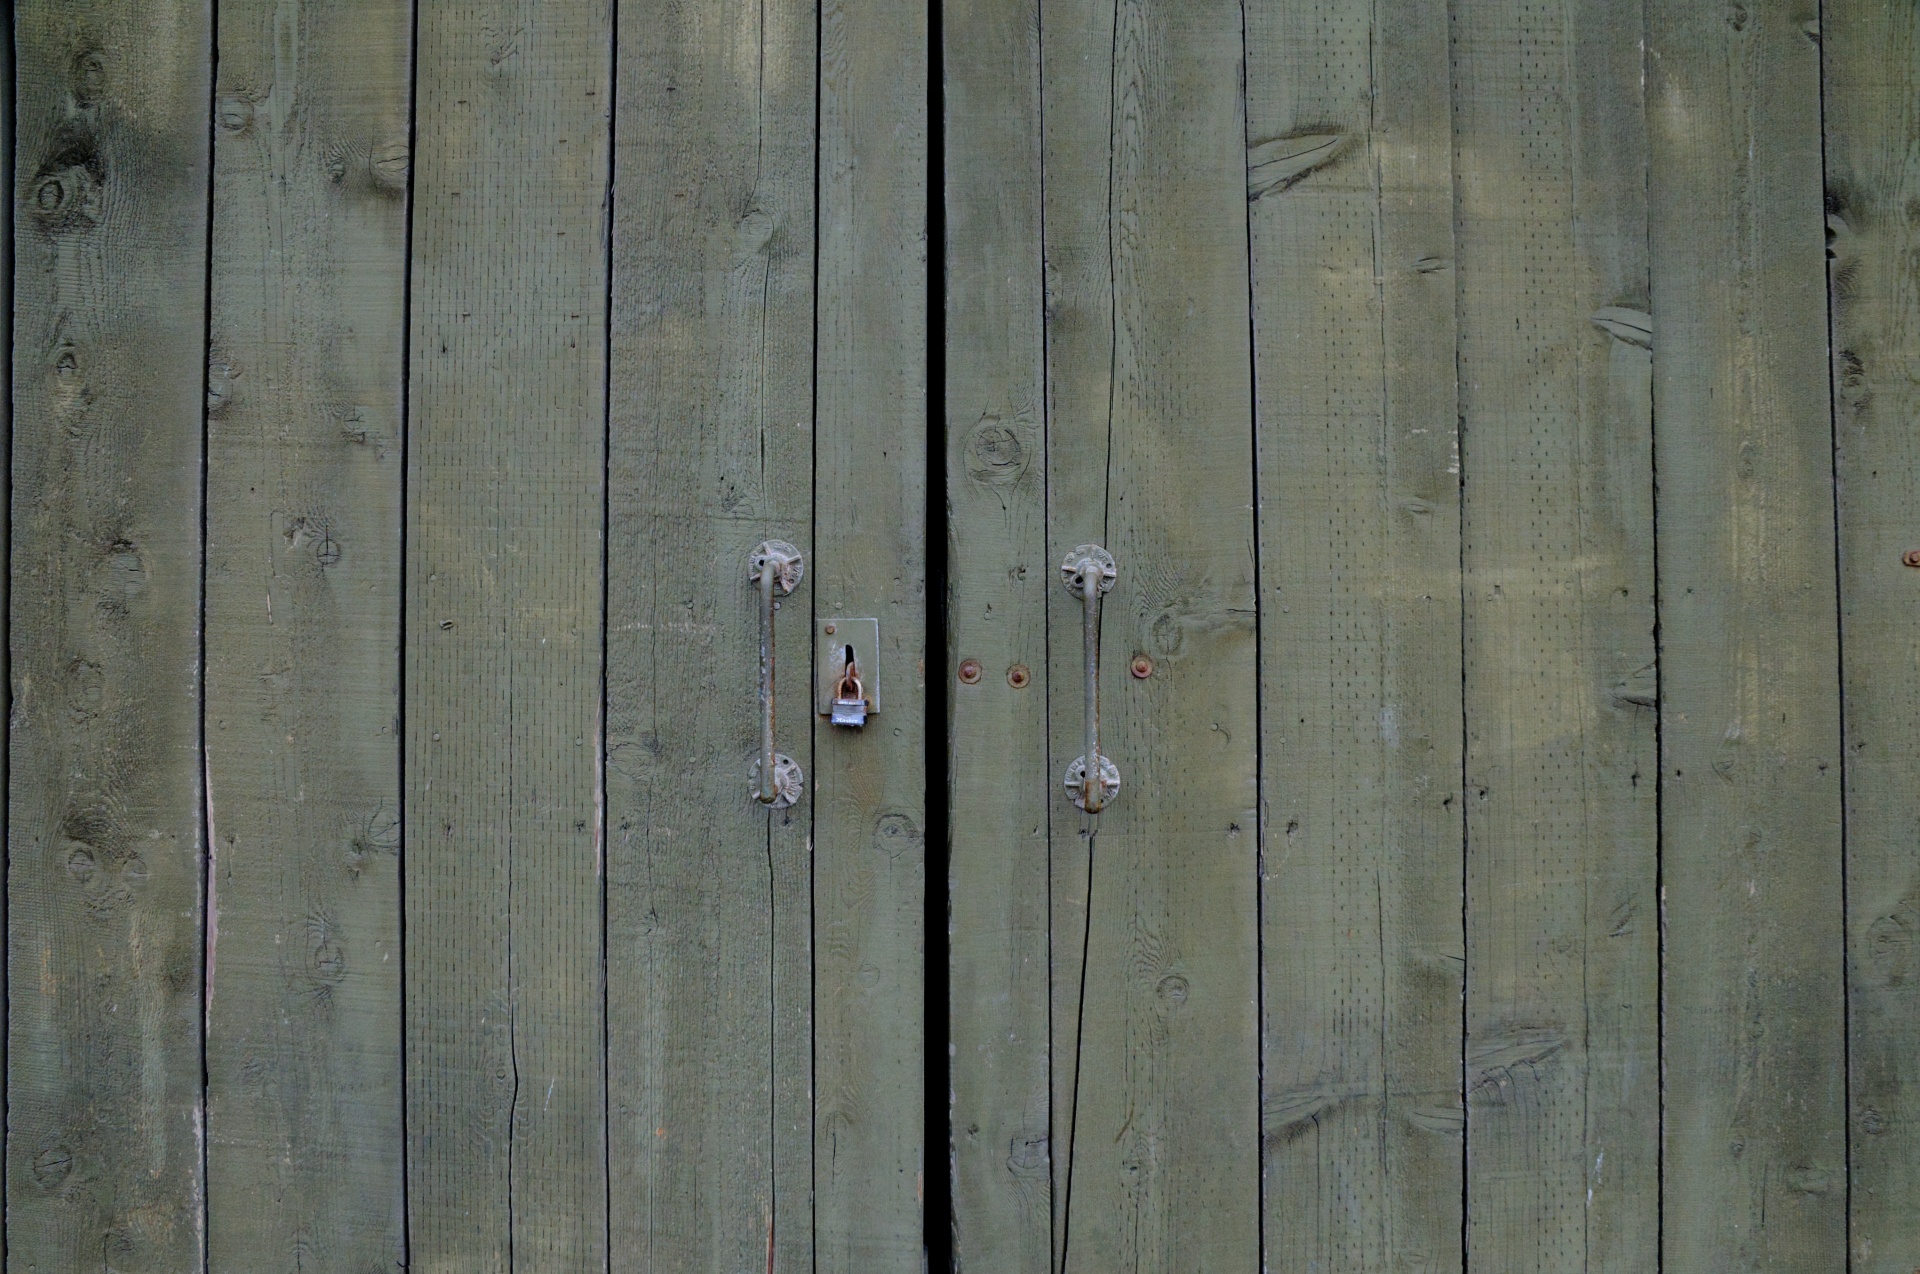 Grunge Wood Panel Doors Background